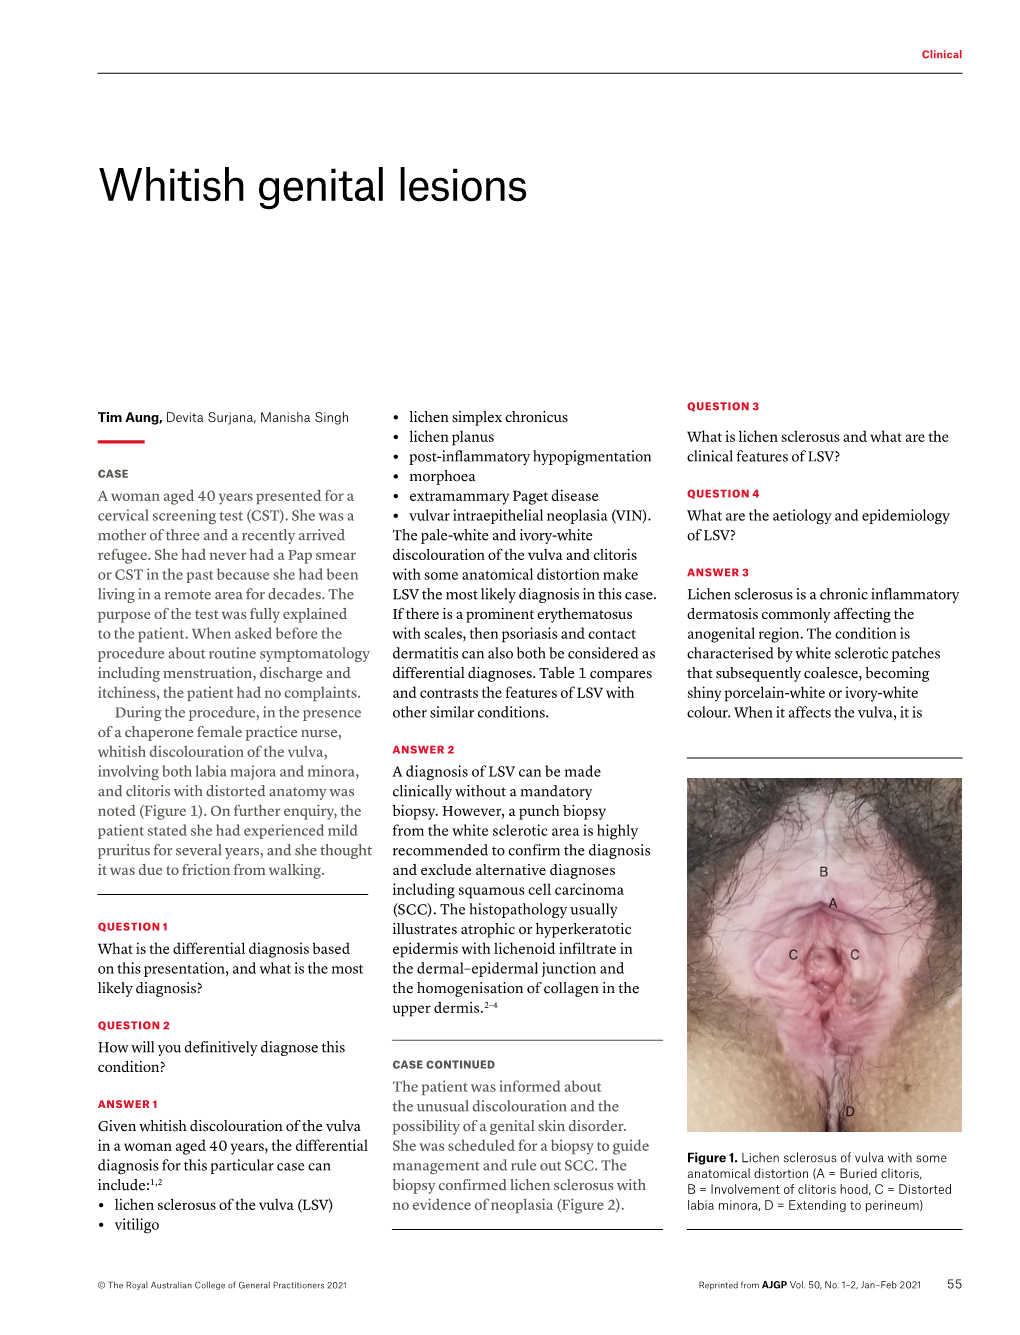 Whitish Genital Lesions